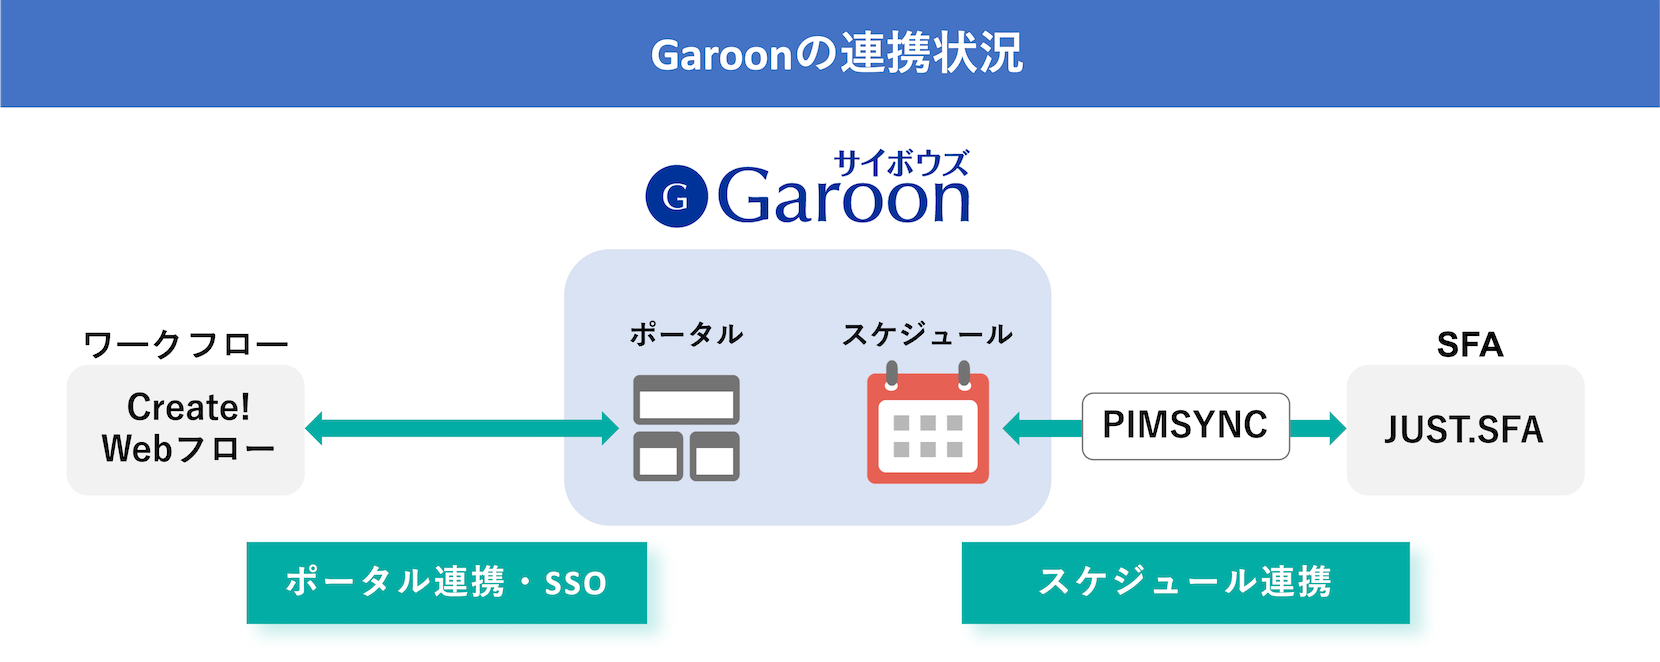 Garoonと他ツールの連携状況